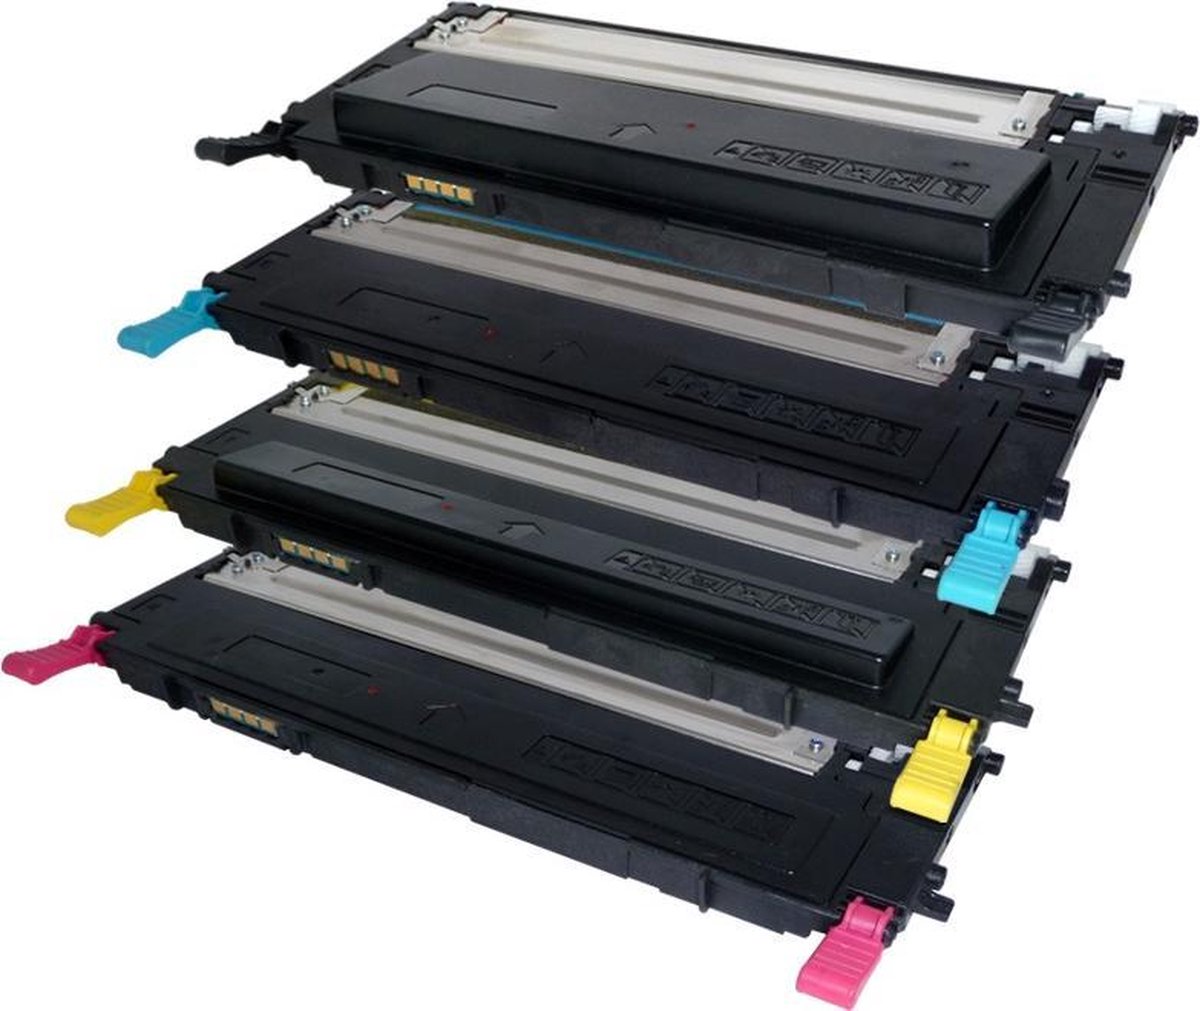 Inkmaster Premium Huismerk XL multipack voor samsung CLT-4072S zwart, rood, blauw, geel | Samsung CLP320/ CLP320N/ CLP325/ CLP325N/ CLP325W/ CLX3180/ C